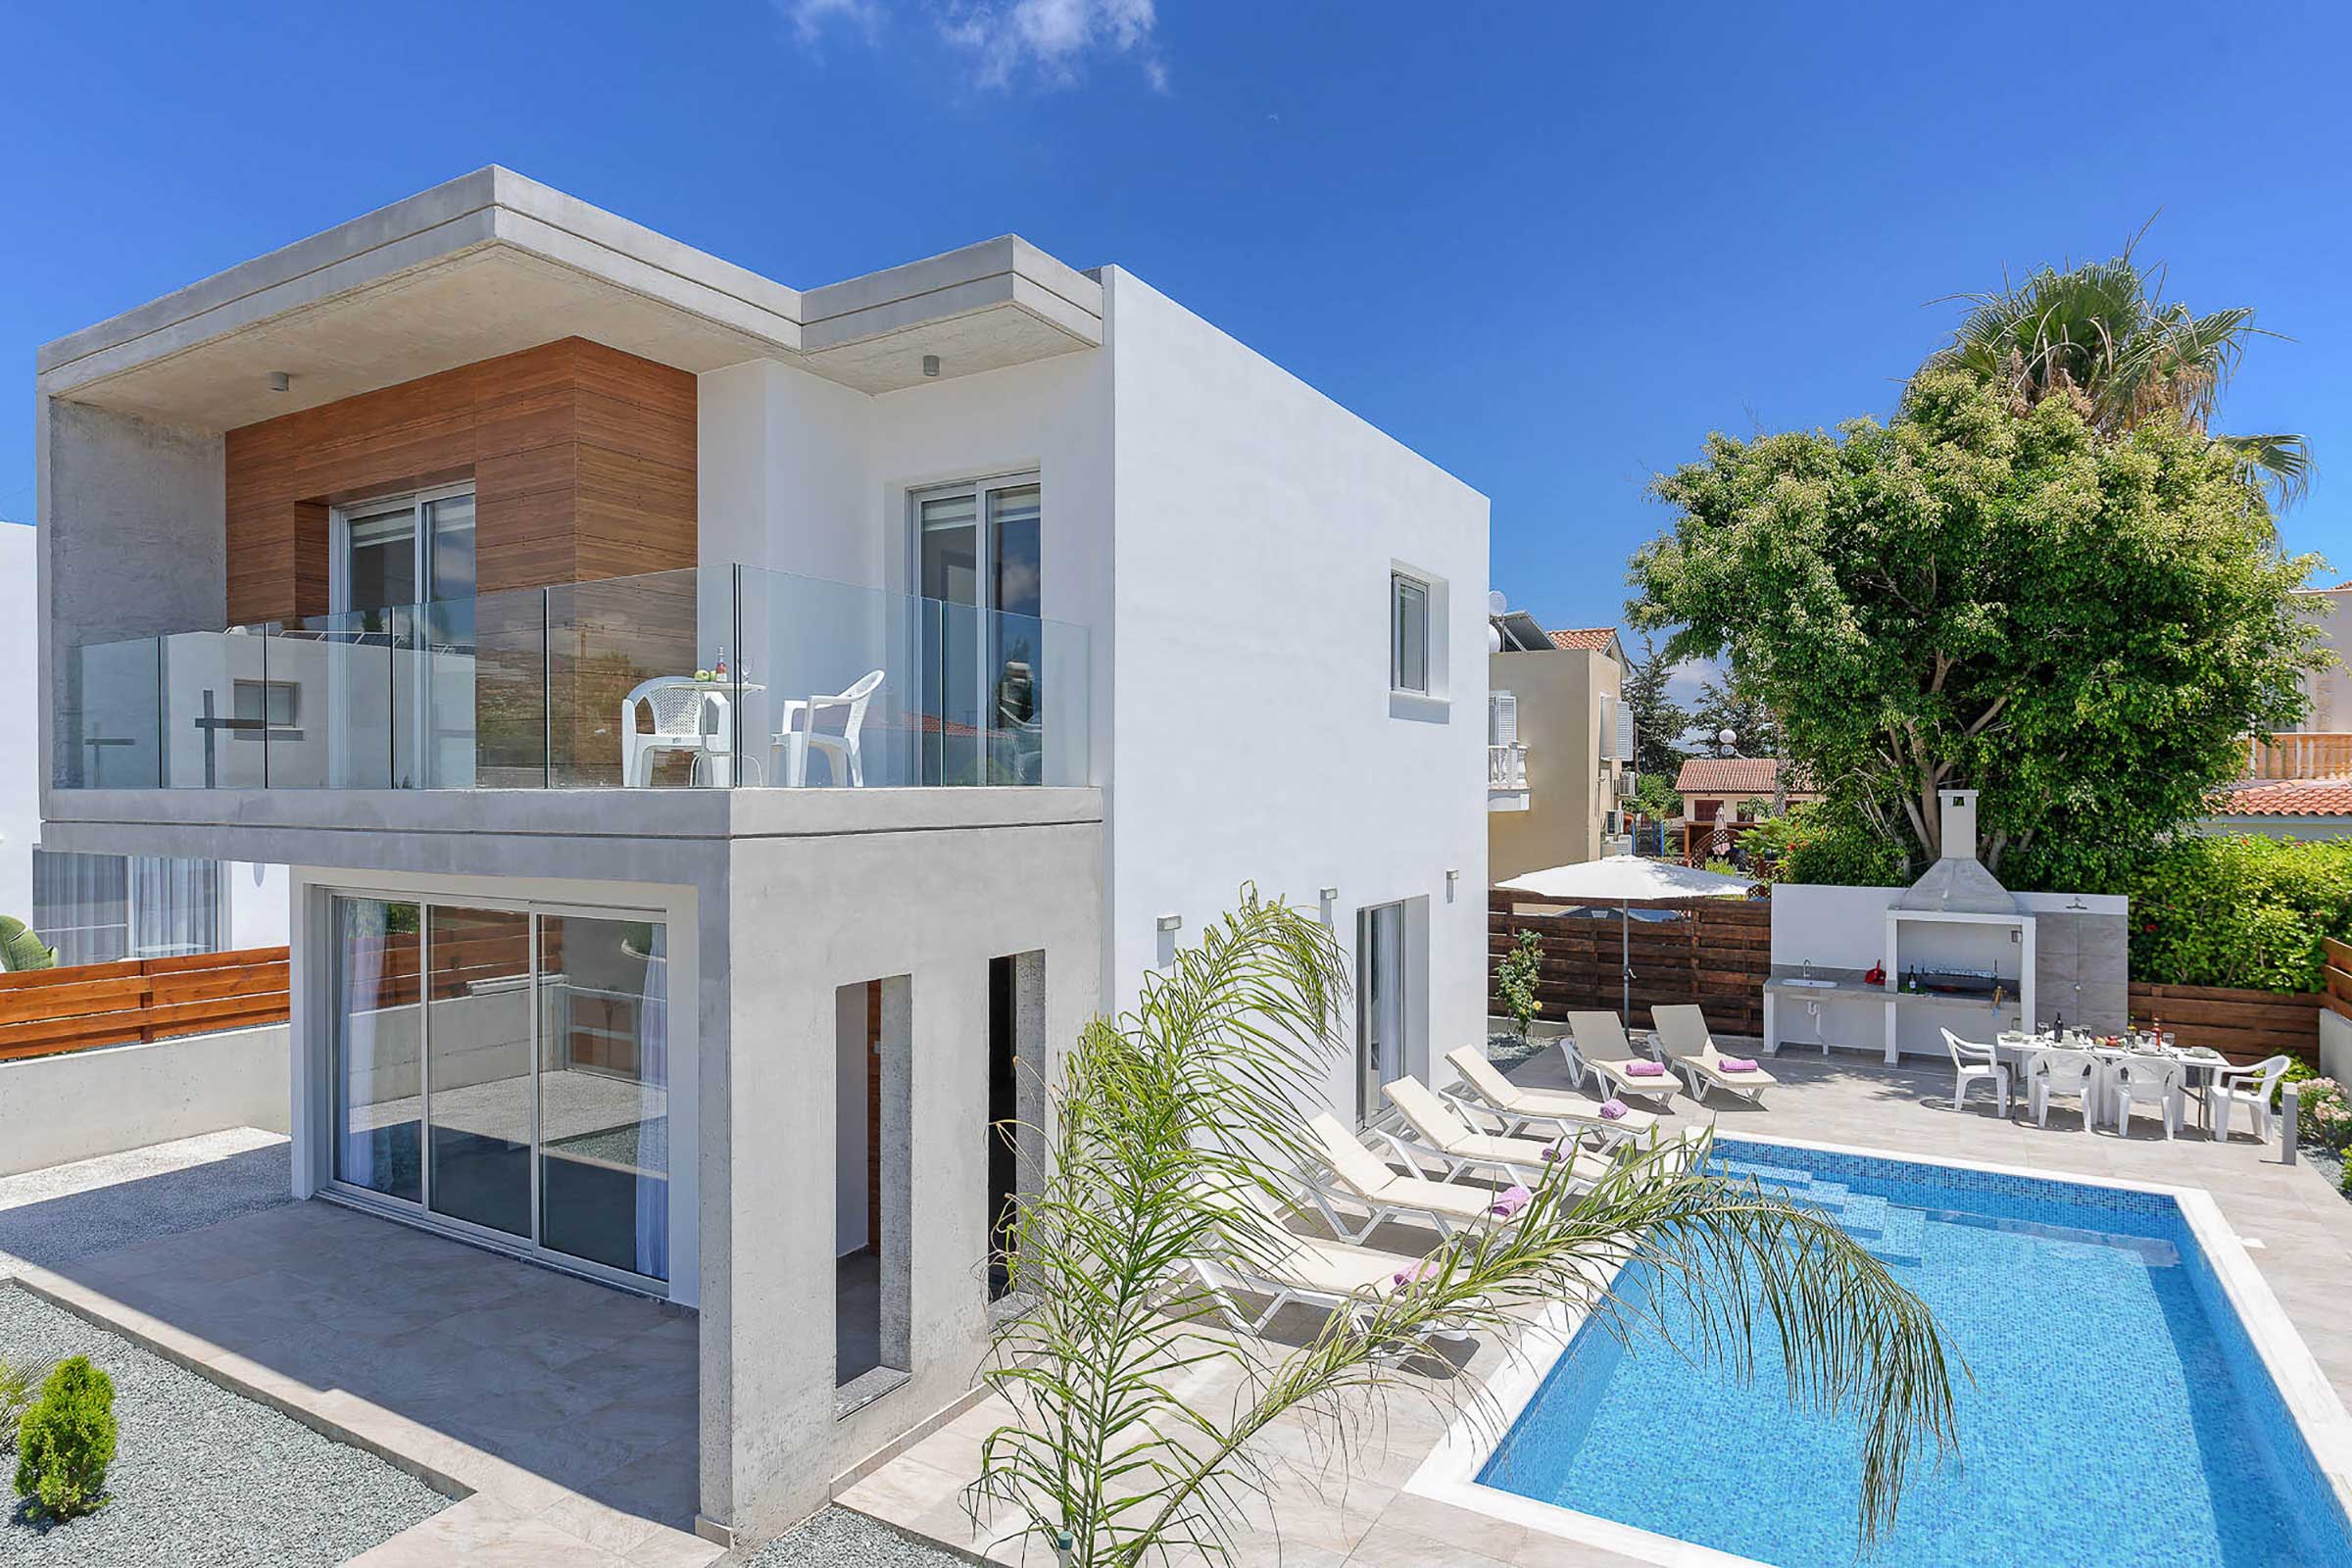 Villa coral. Bay Villas. Coral Palm Villa & Apartments. Продается дом на Кипре в Корал Бэй. Photo Coral Bay Ave Cyprus.